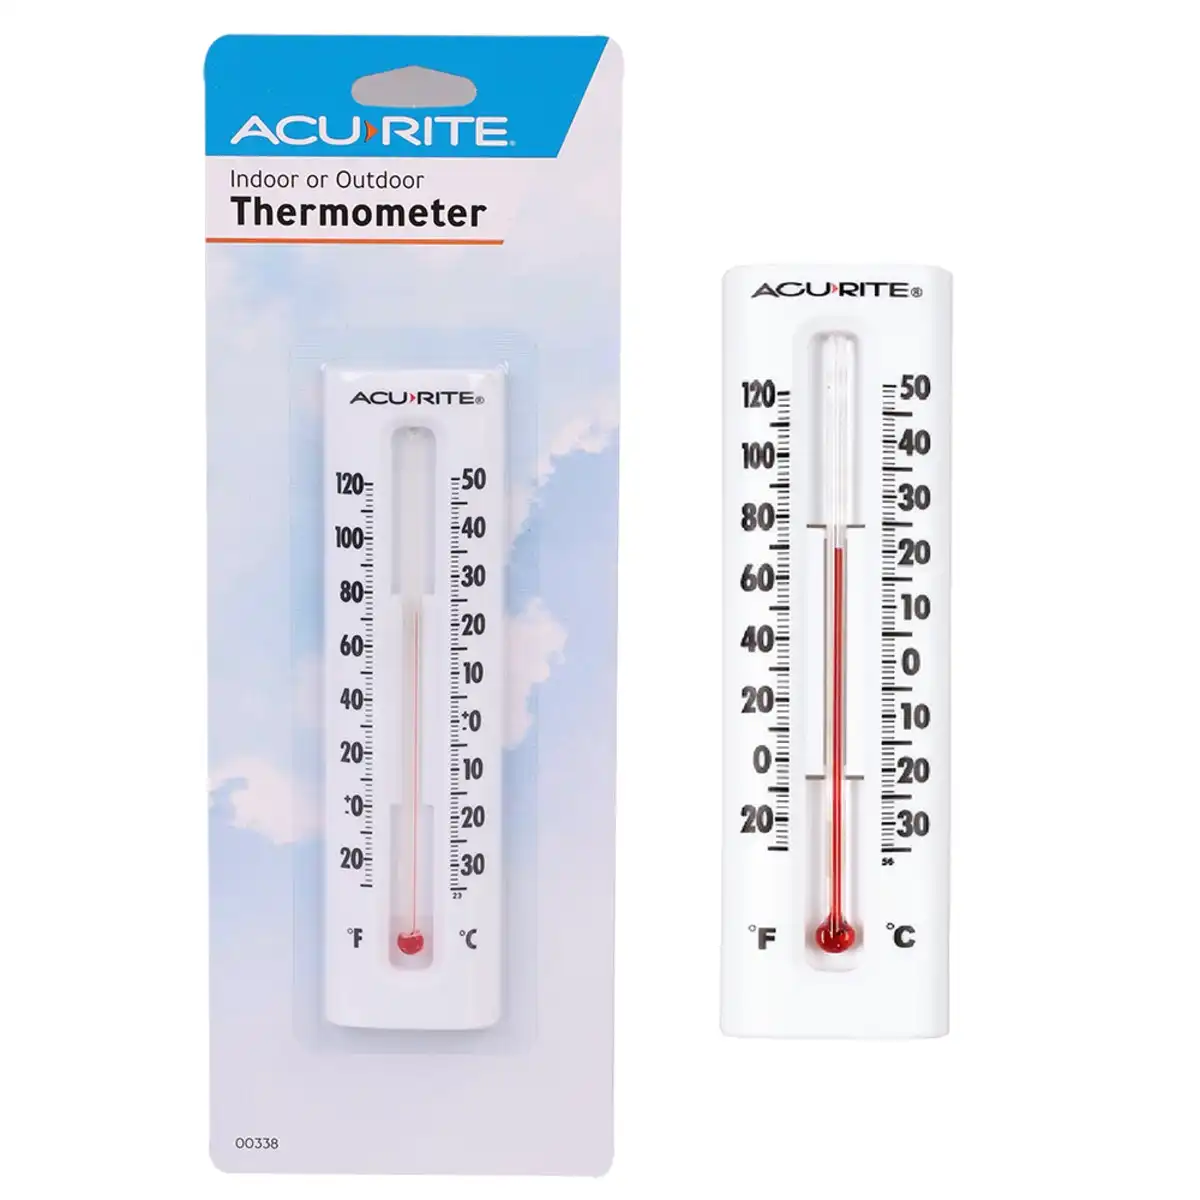 AcuRite Indoor/Outdoor Thermometer